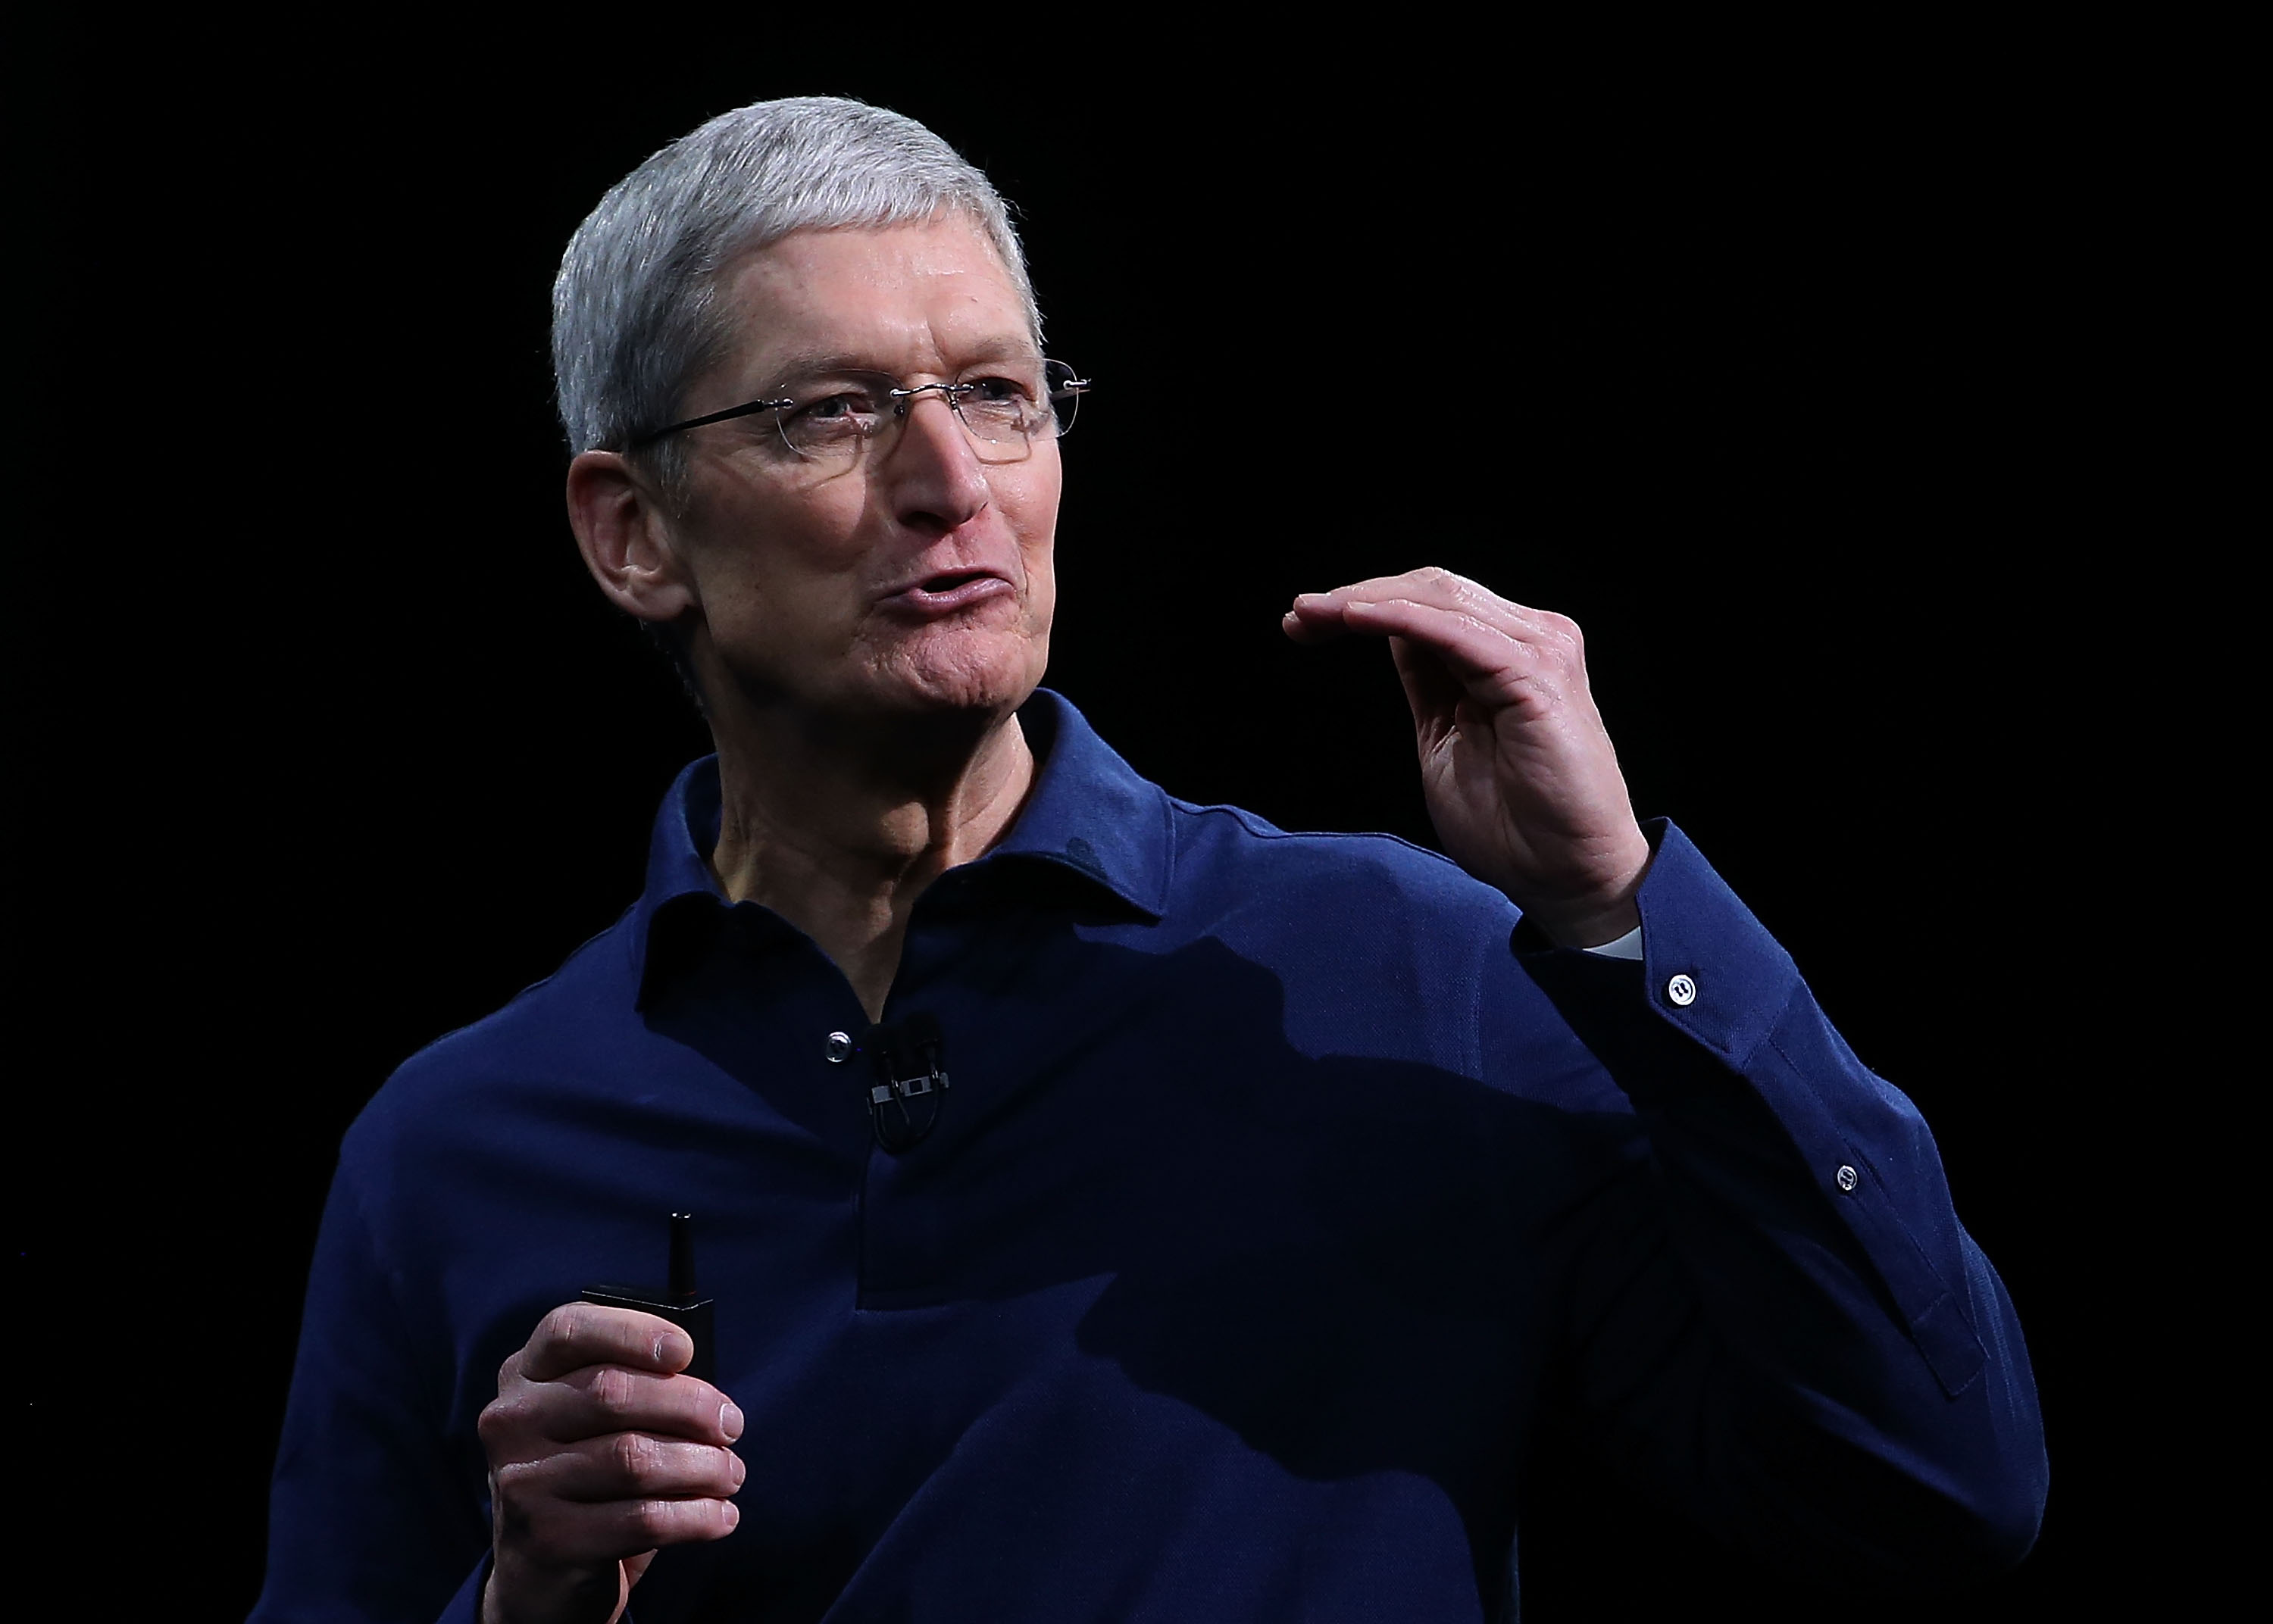 LIVE STREAM Apple’s Tim Cook Gives WWDC Keynote Address